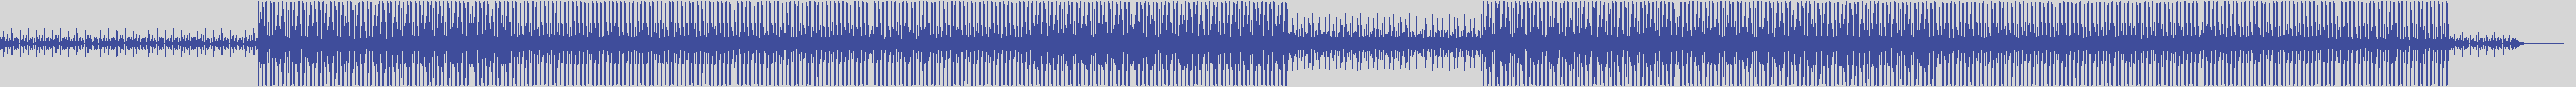 nf_boyz_records [NFY013] Dj Bons - Fujiko [Tribal Mix] audio wave form